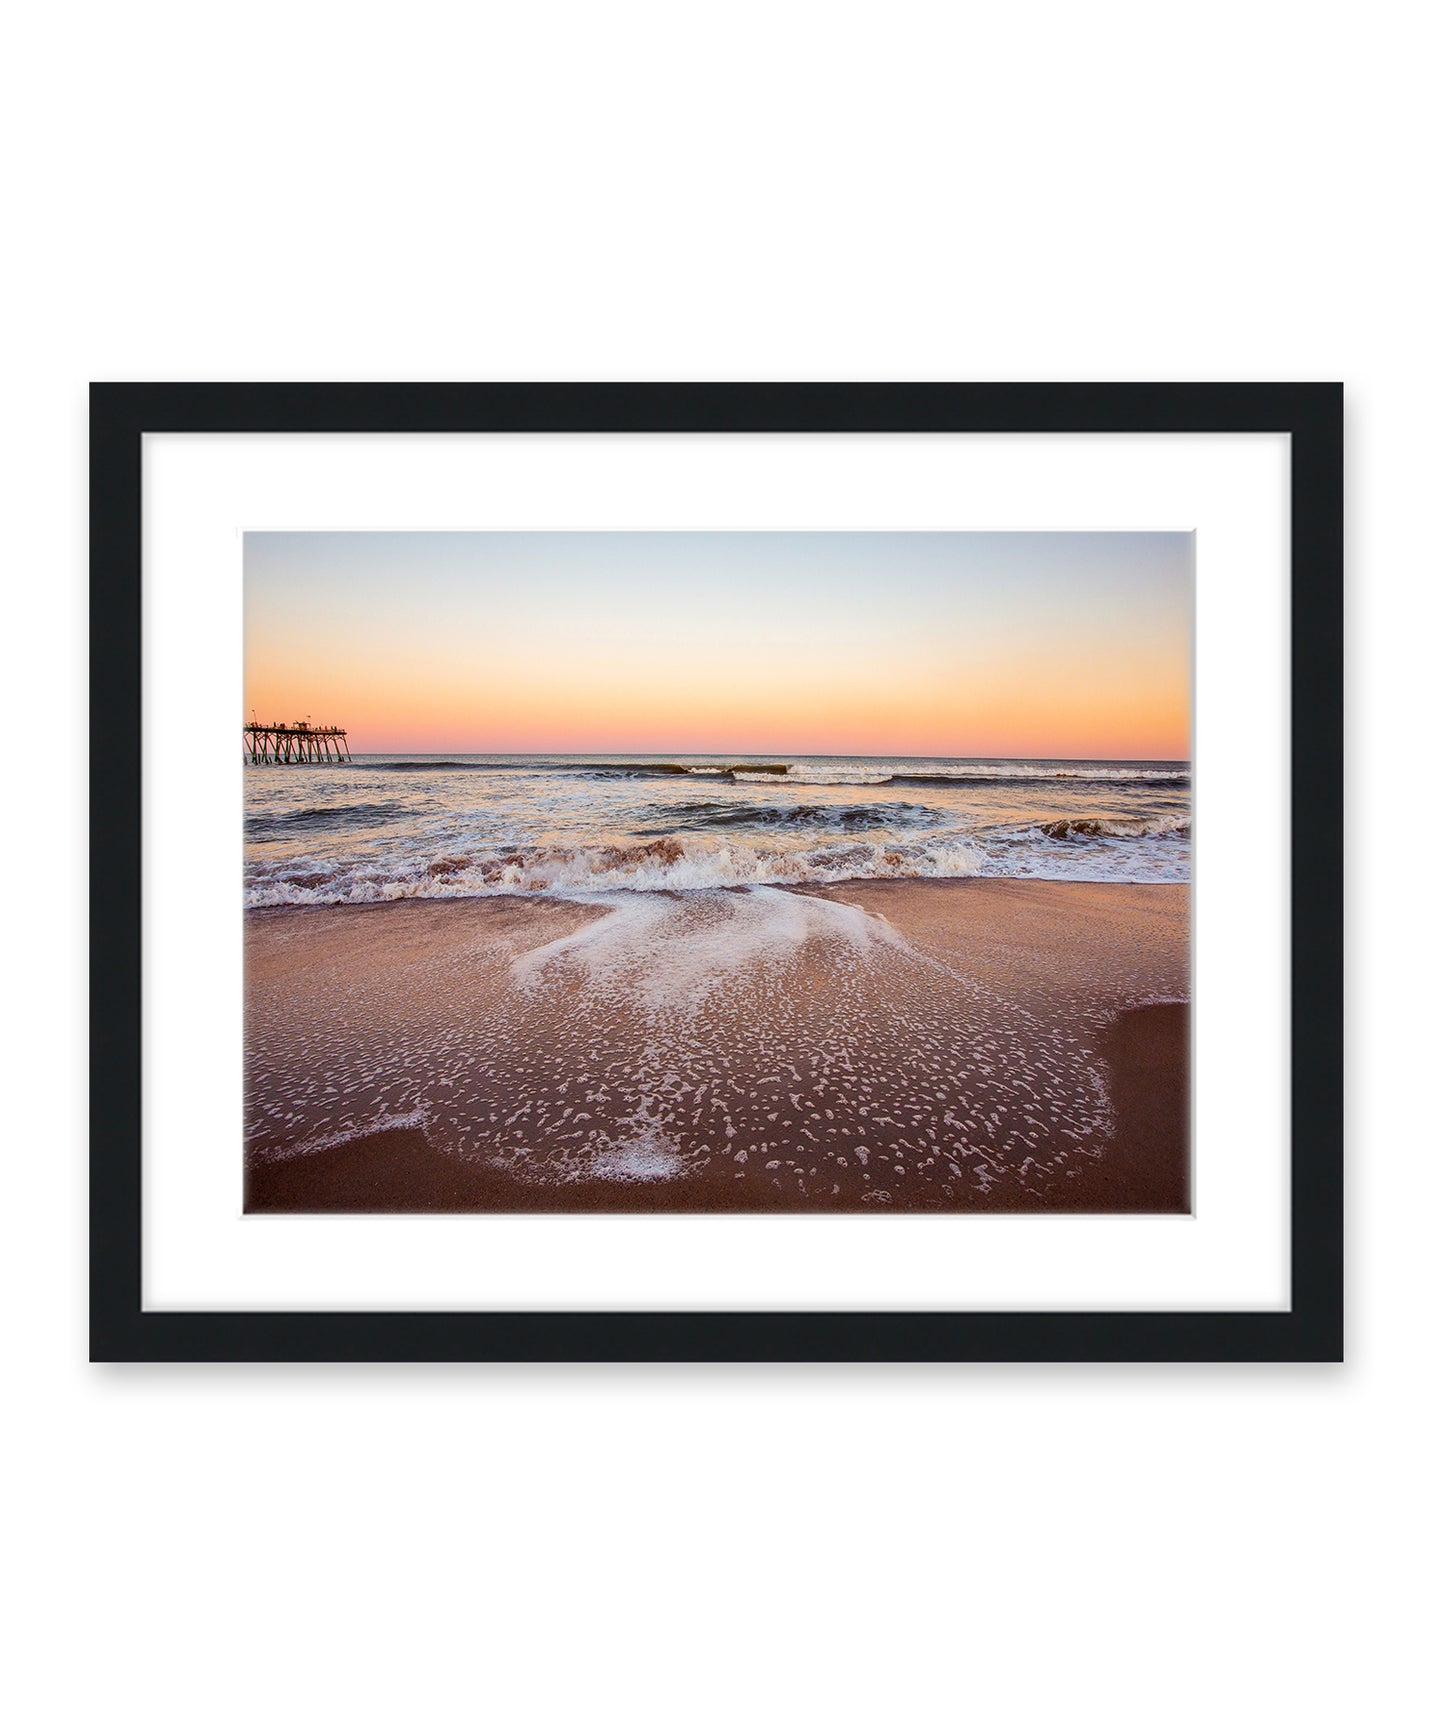 warm summer sunset Carolina beach photograph, black frame by Wright and Roam